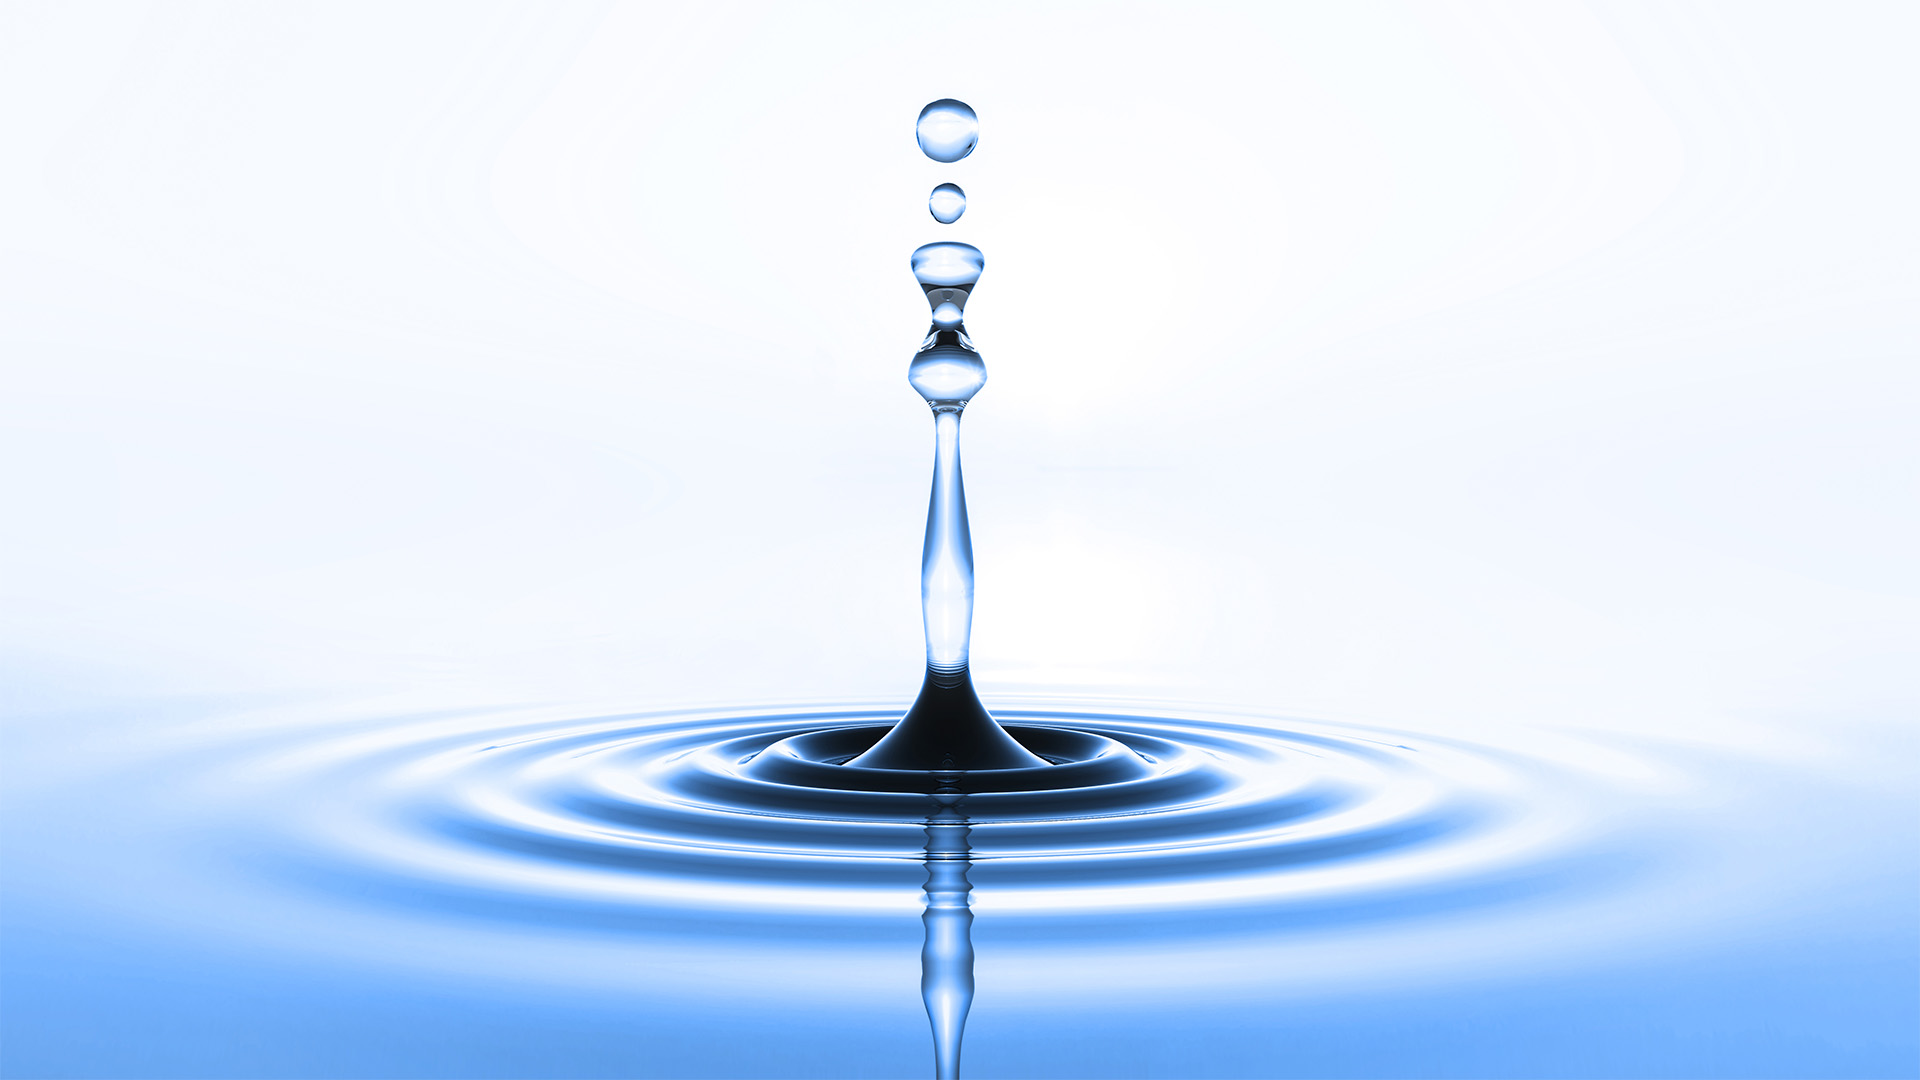 Water-based liquid detection